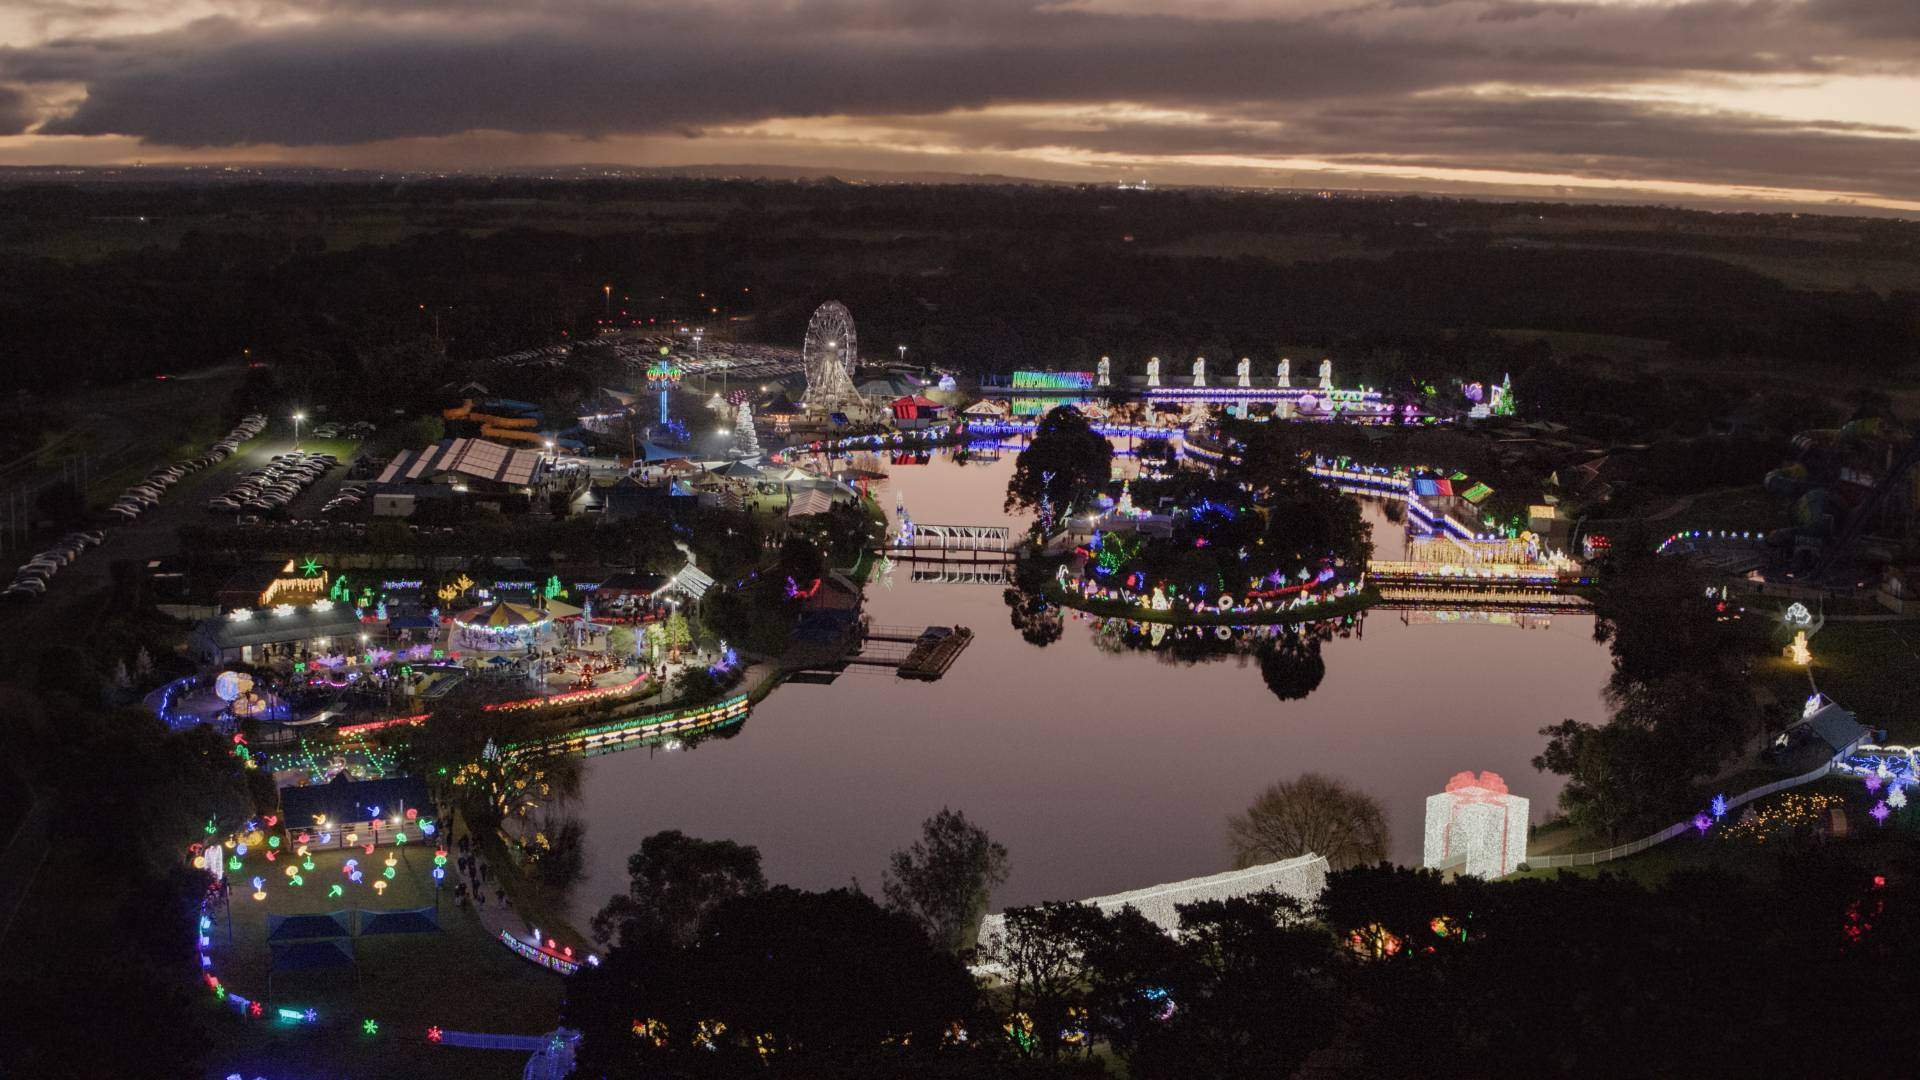 Geelong's Christmas Festival of Lights